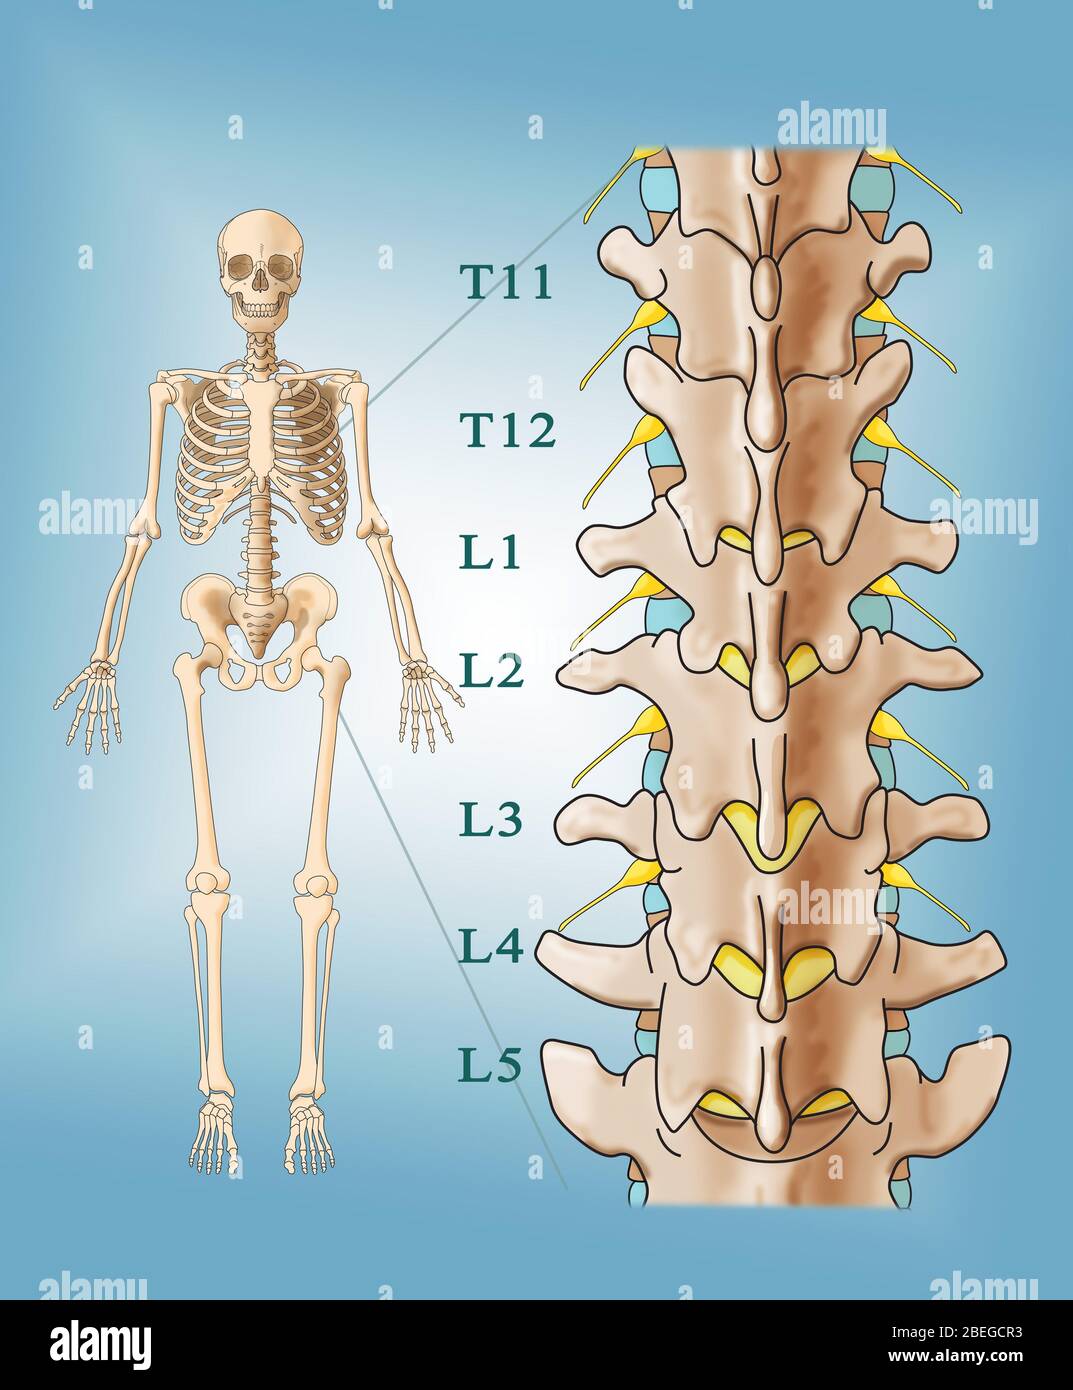 Lumbar Spine Anatomy, Illustration Stock Photo - Alamy